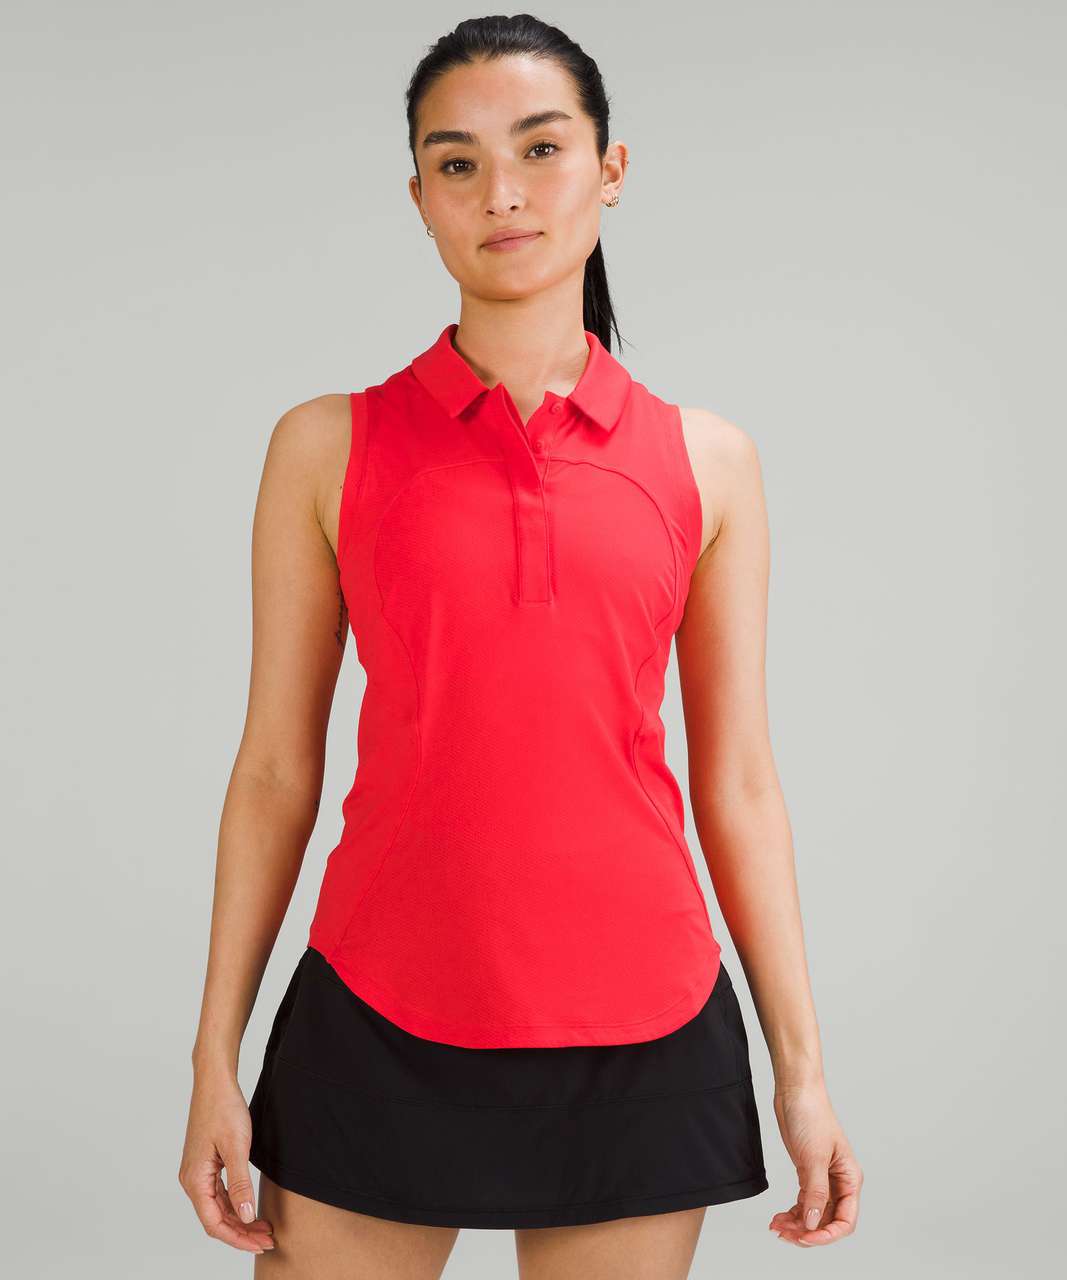 Lululemon Quick-Dry Sleeveless Polo Shirt - Carnation Red